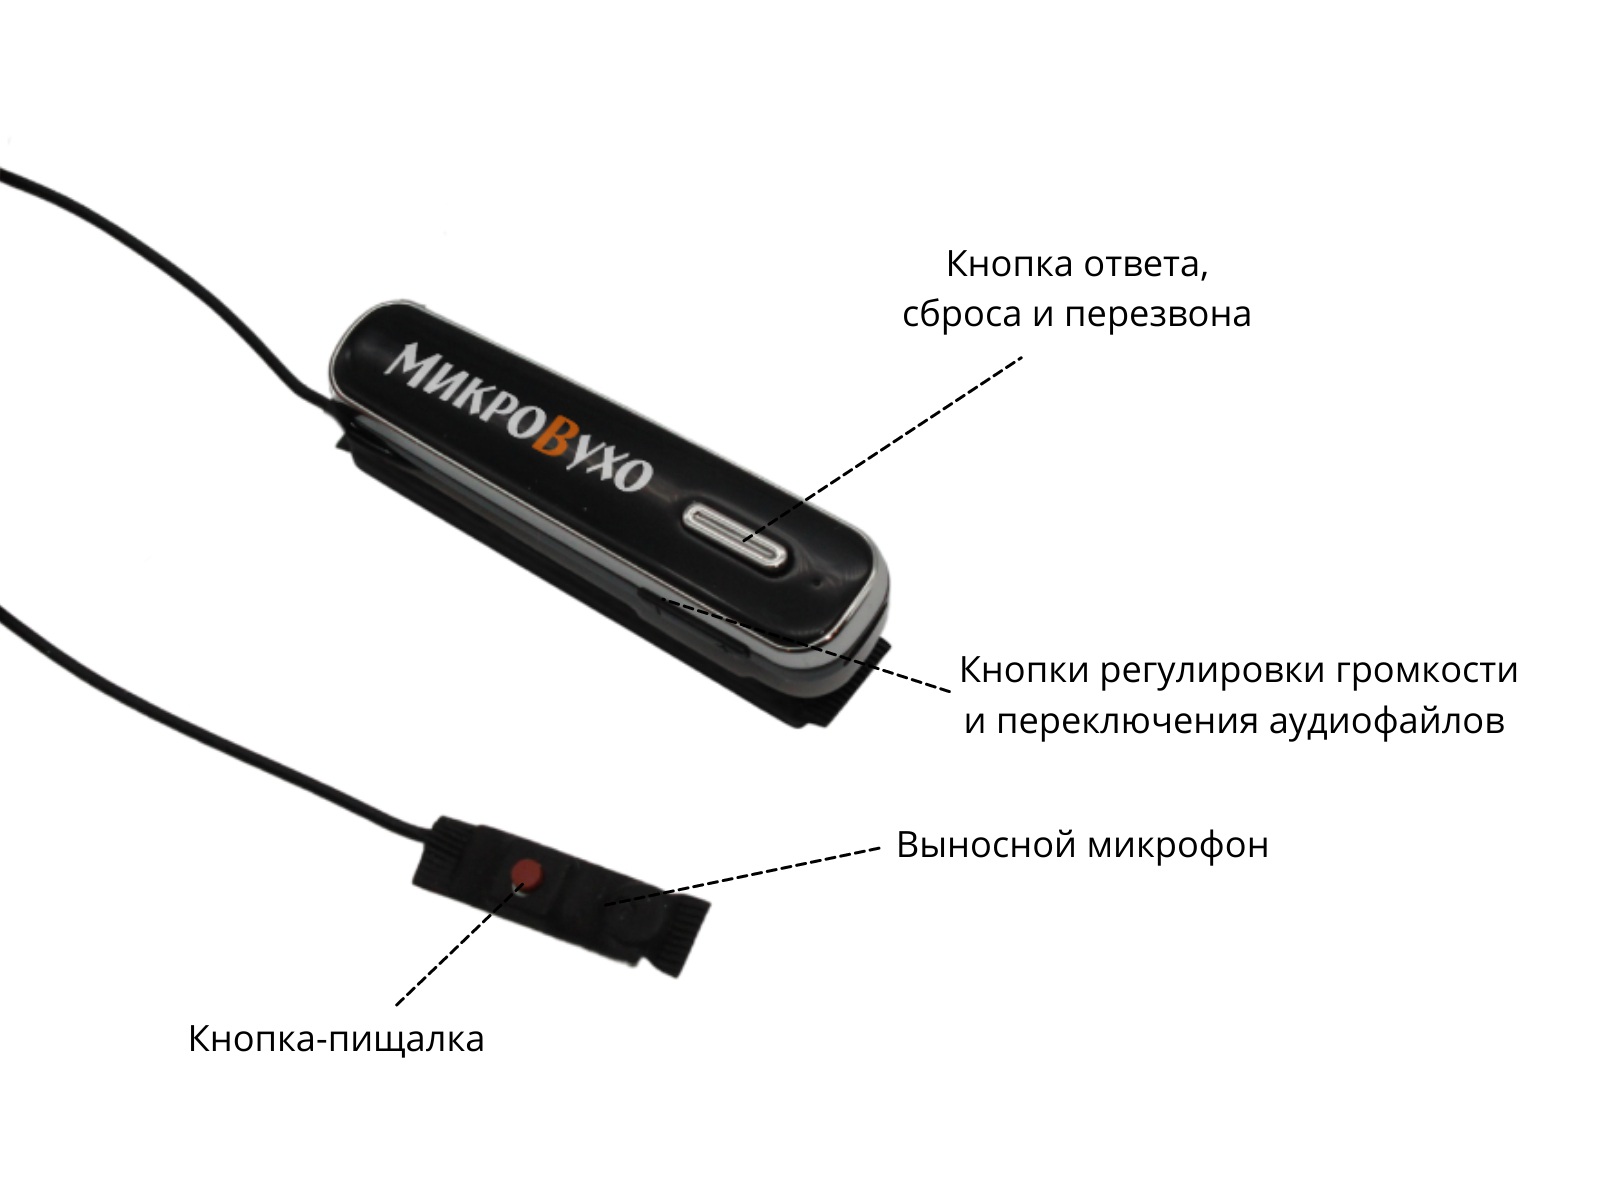 Bluetooth Box Premier Lite Plus c кнопкой-пищалкой и магнитами 2 мм - изображение 5